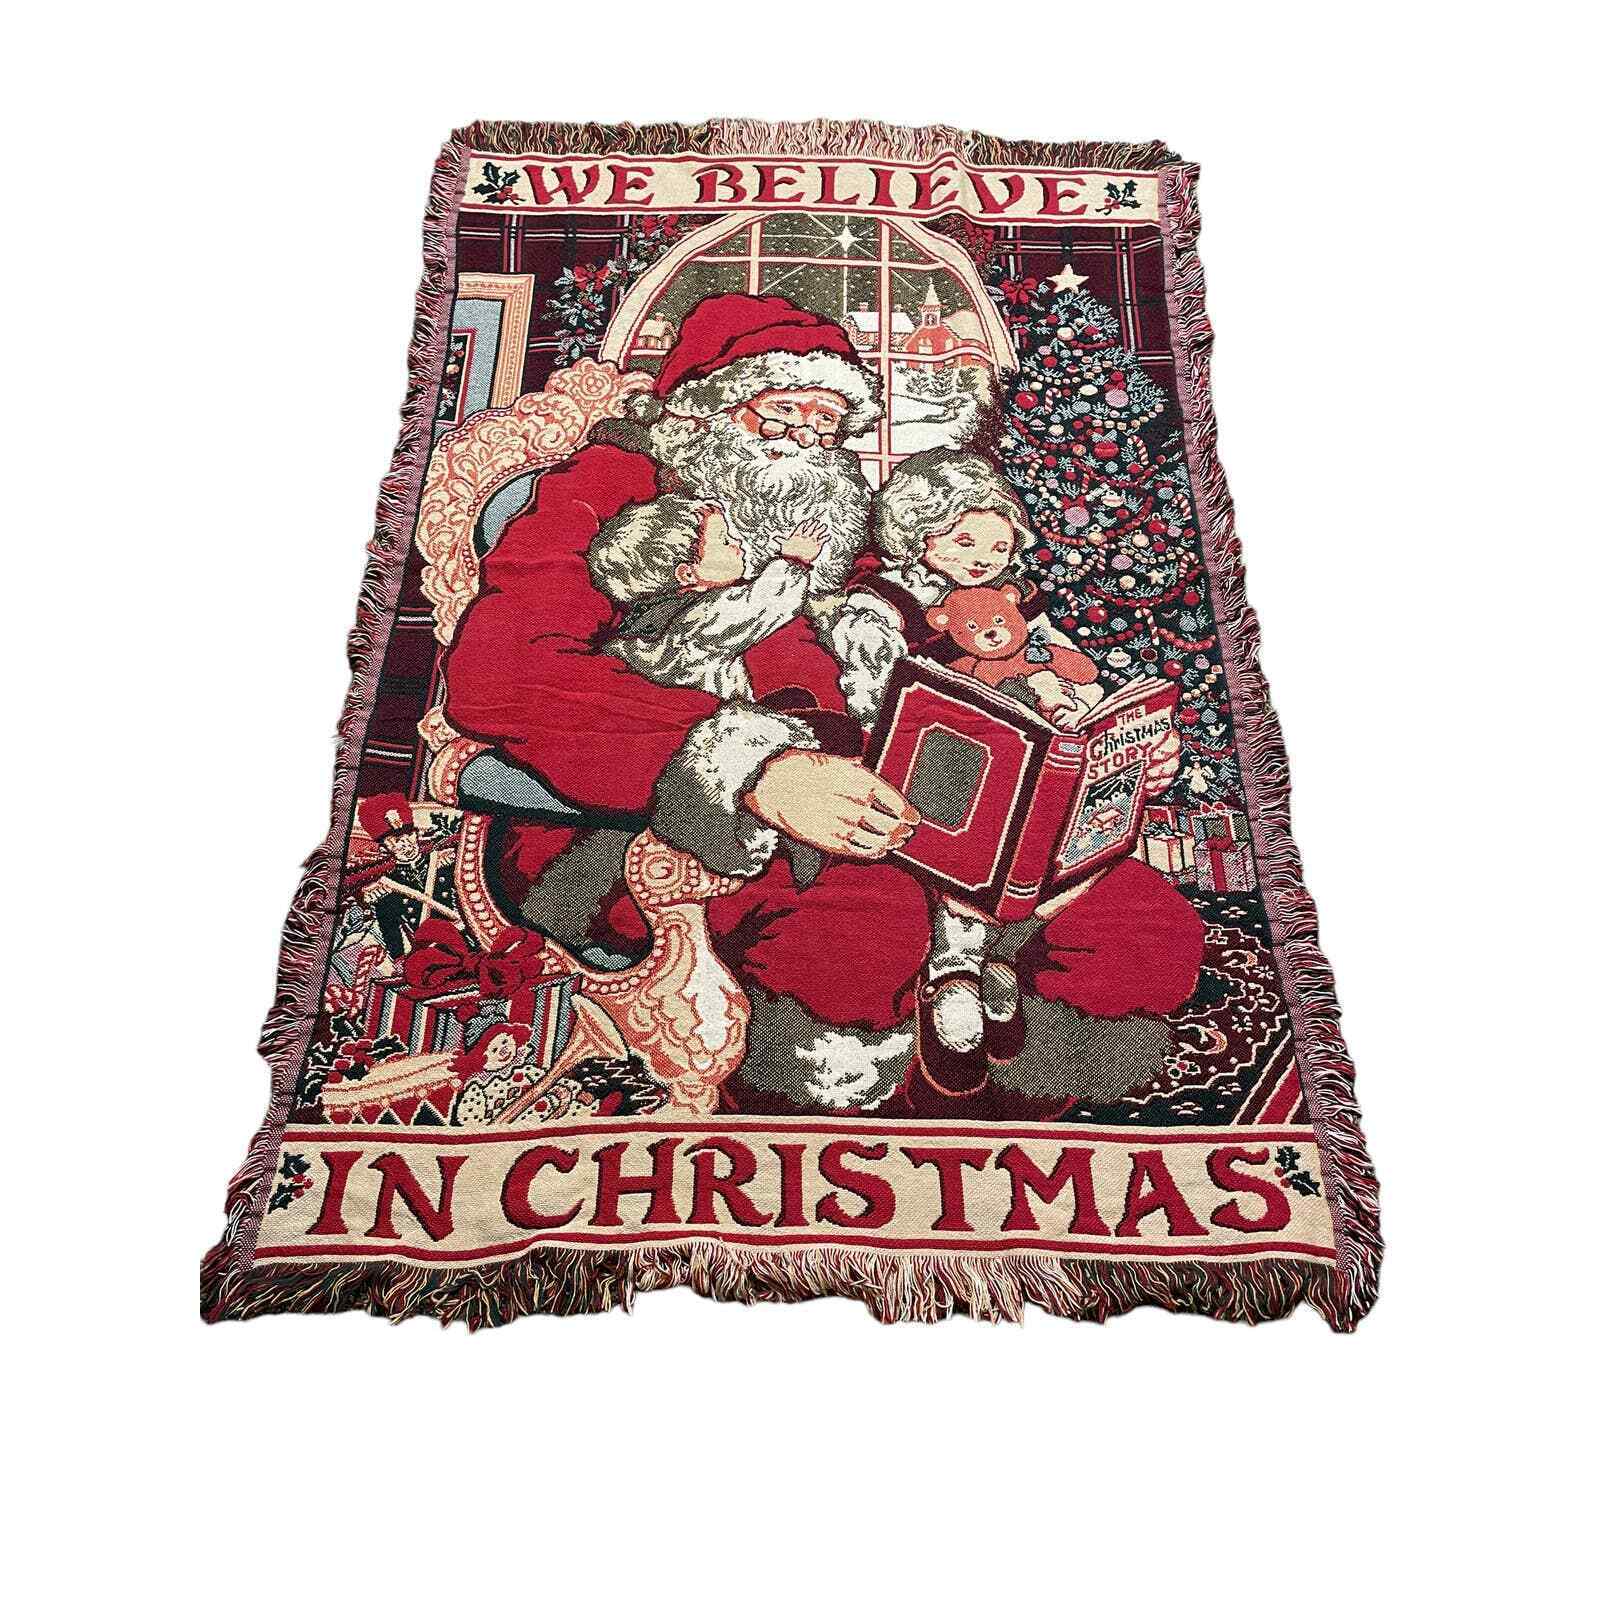 Christmas Throw Woven Blanket Santa Tapestry We Believe In Christmas Nice 68x46